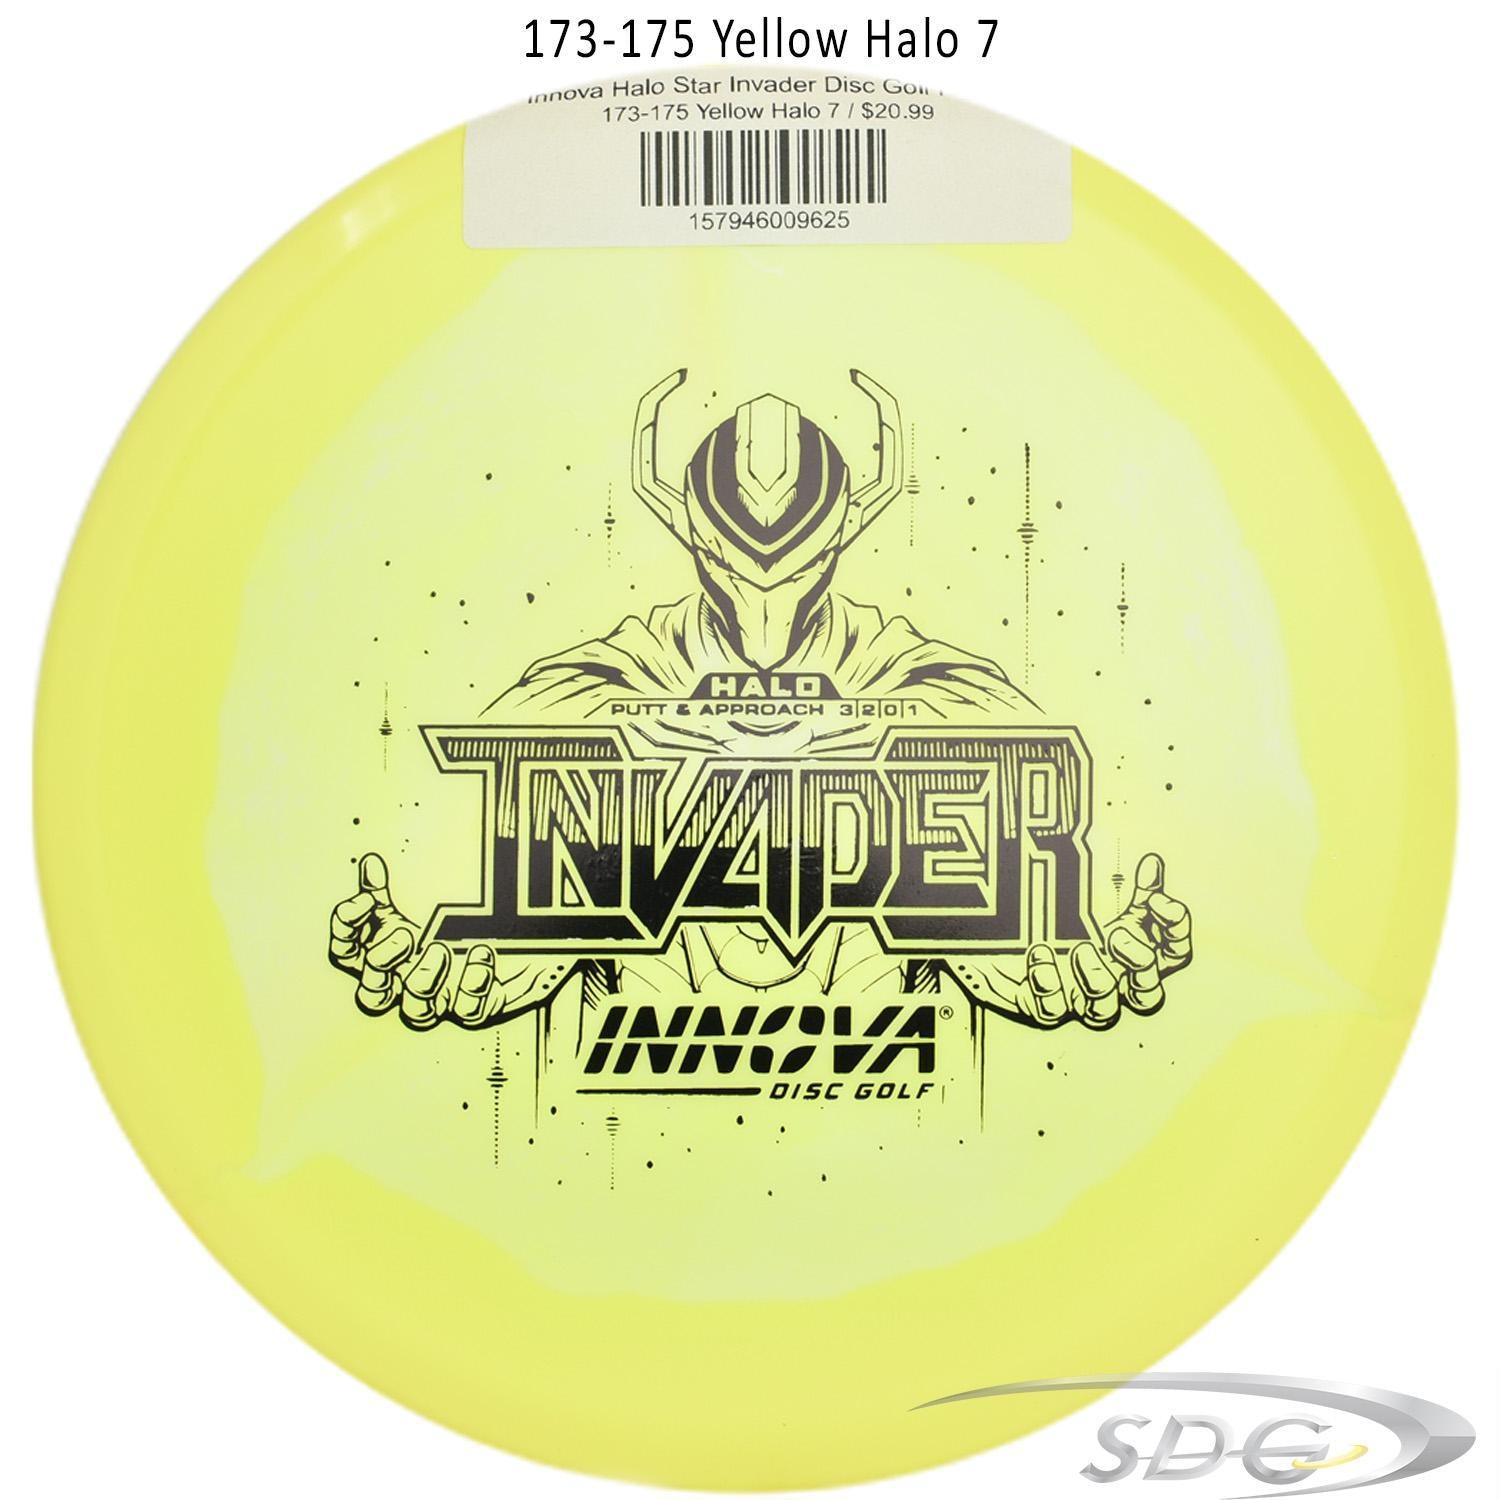 innova-halo-star-invader-disc-golf-putter 173-175 Yellow Halo 7 